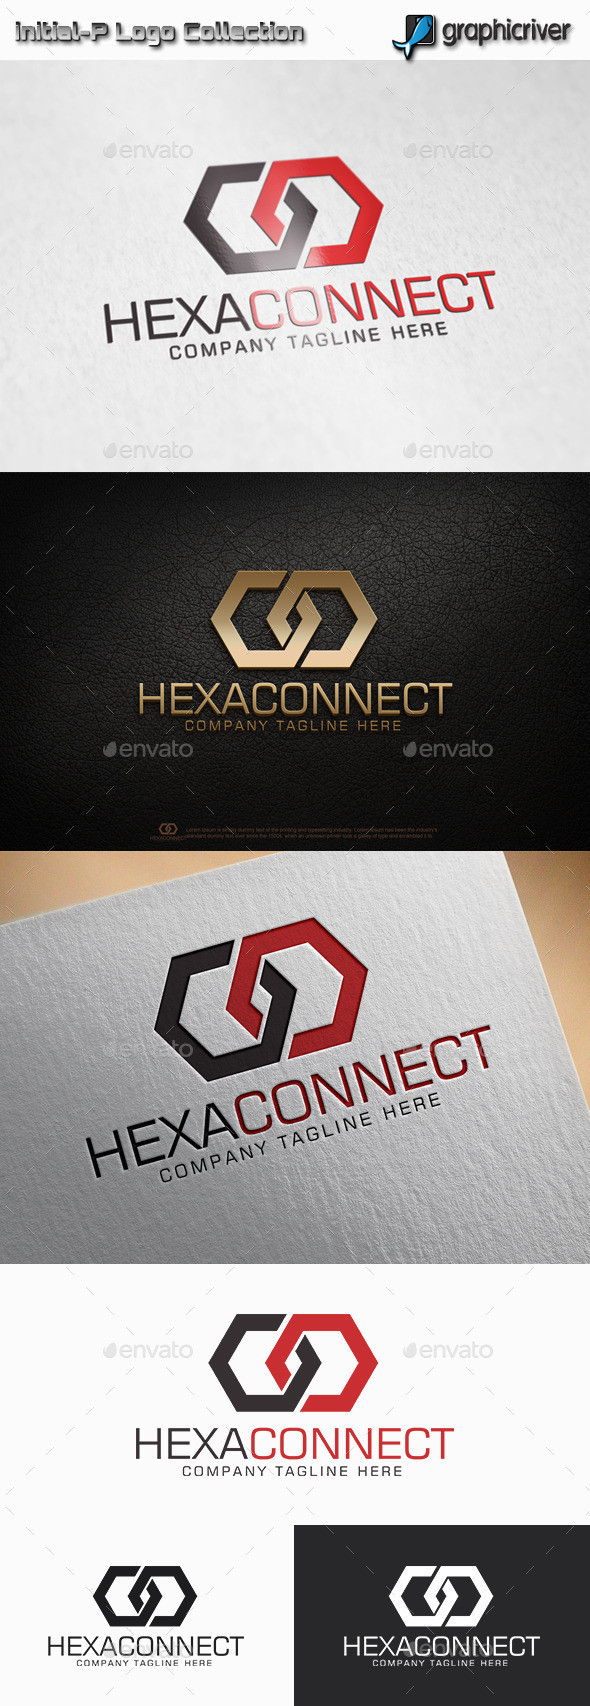 Hexa 20connect 20preview